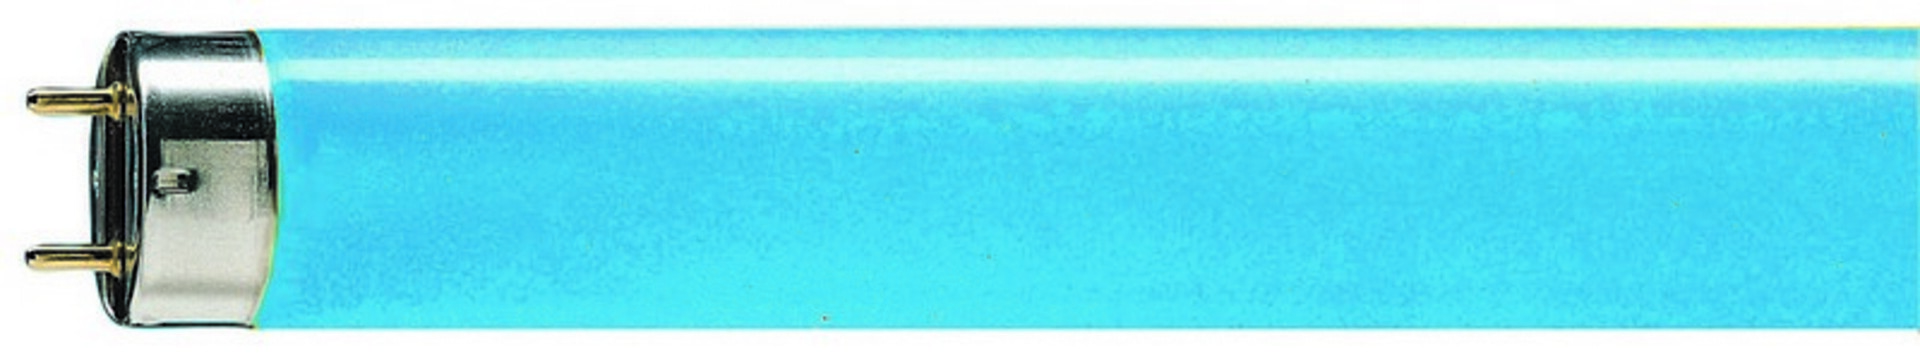 Philips lineární MASTER TL-D 36W/ 18 G13 modrá